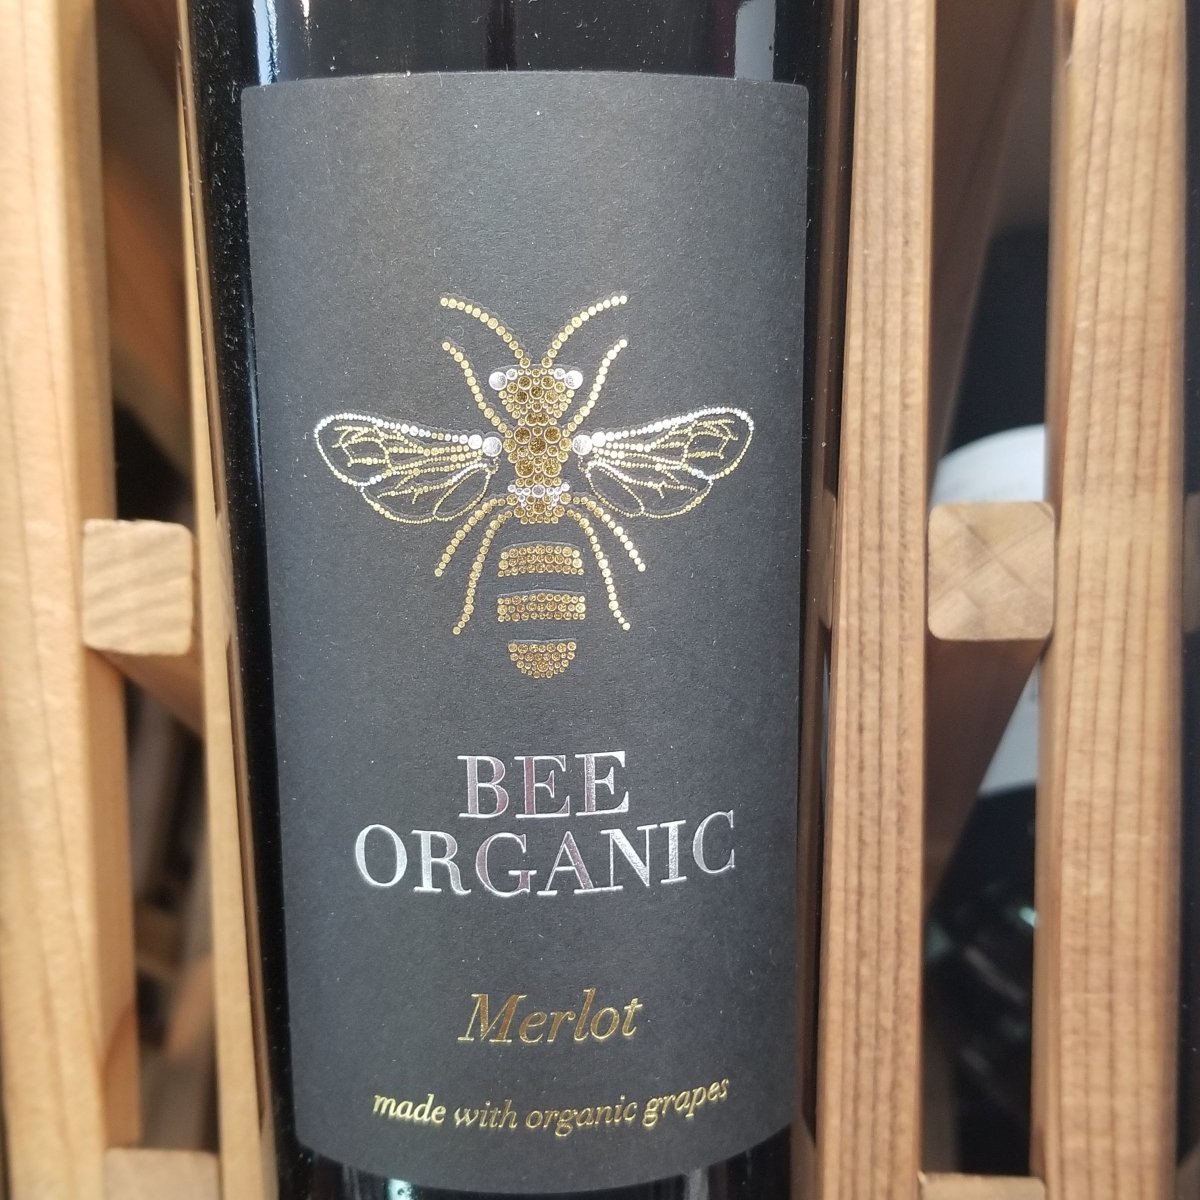 Bee Organic Merlot 750ml - Sip & Say